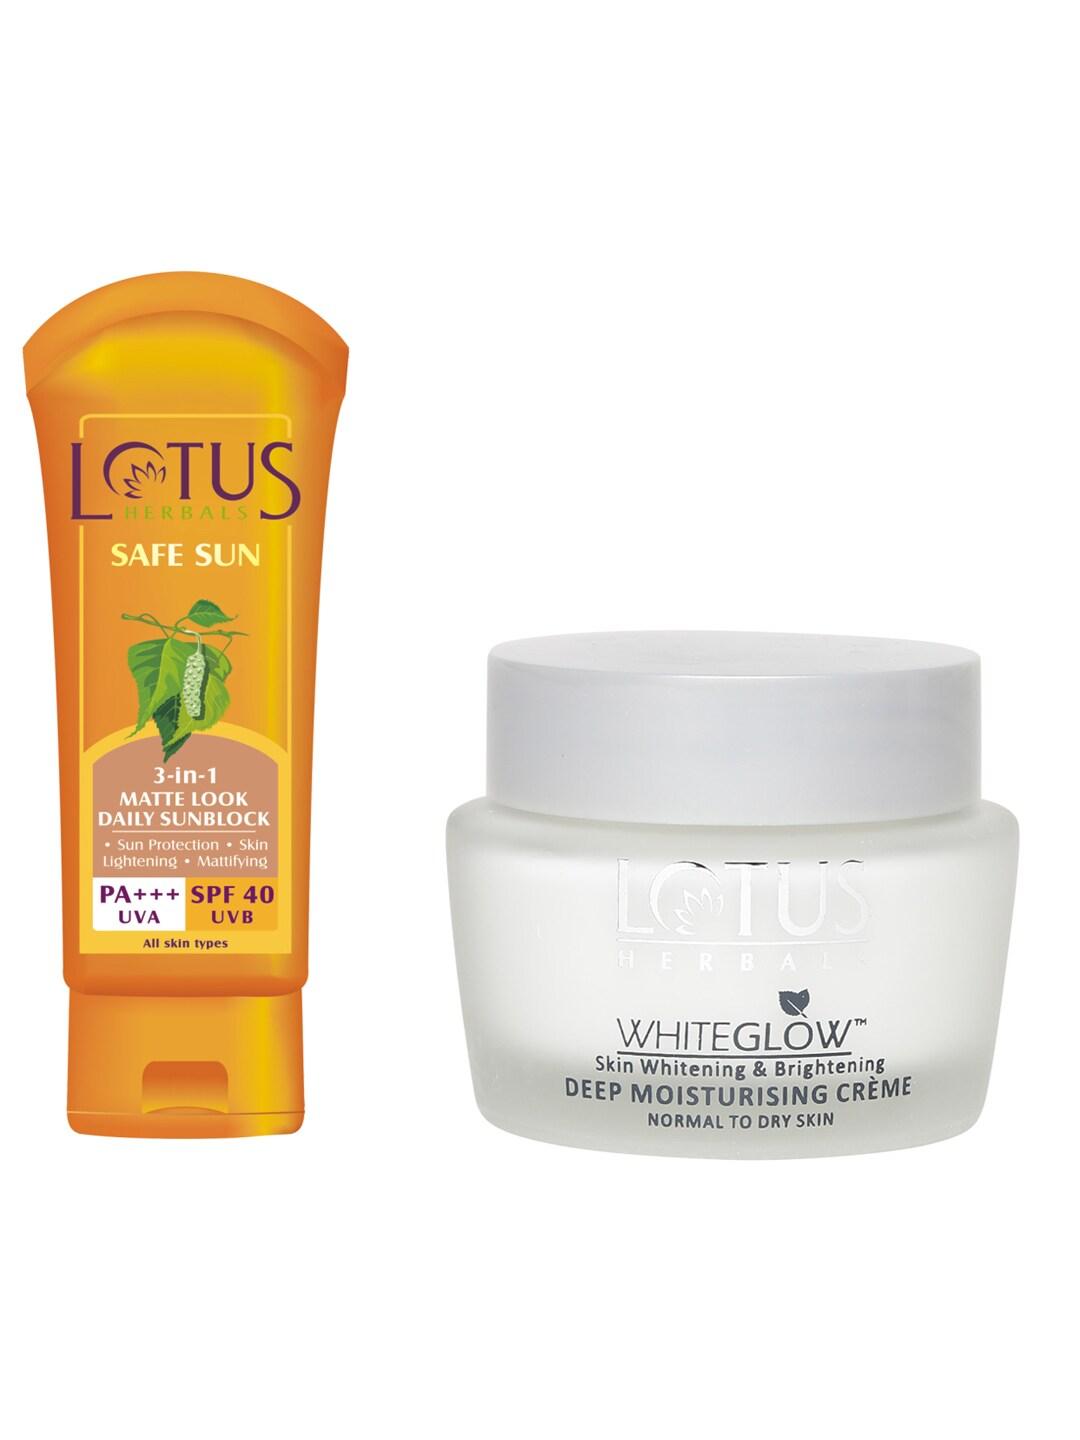 Lotus Herbals Safe Sun Sunscreen & Skin Whitening & Brightening Deep Moisturizing Cream